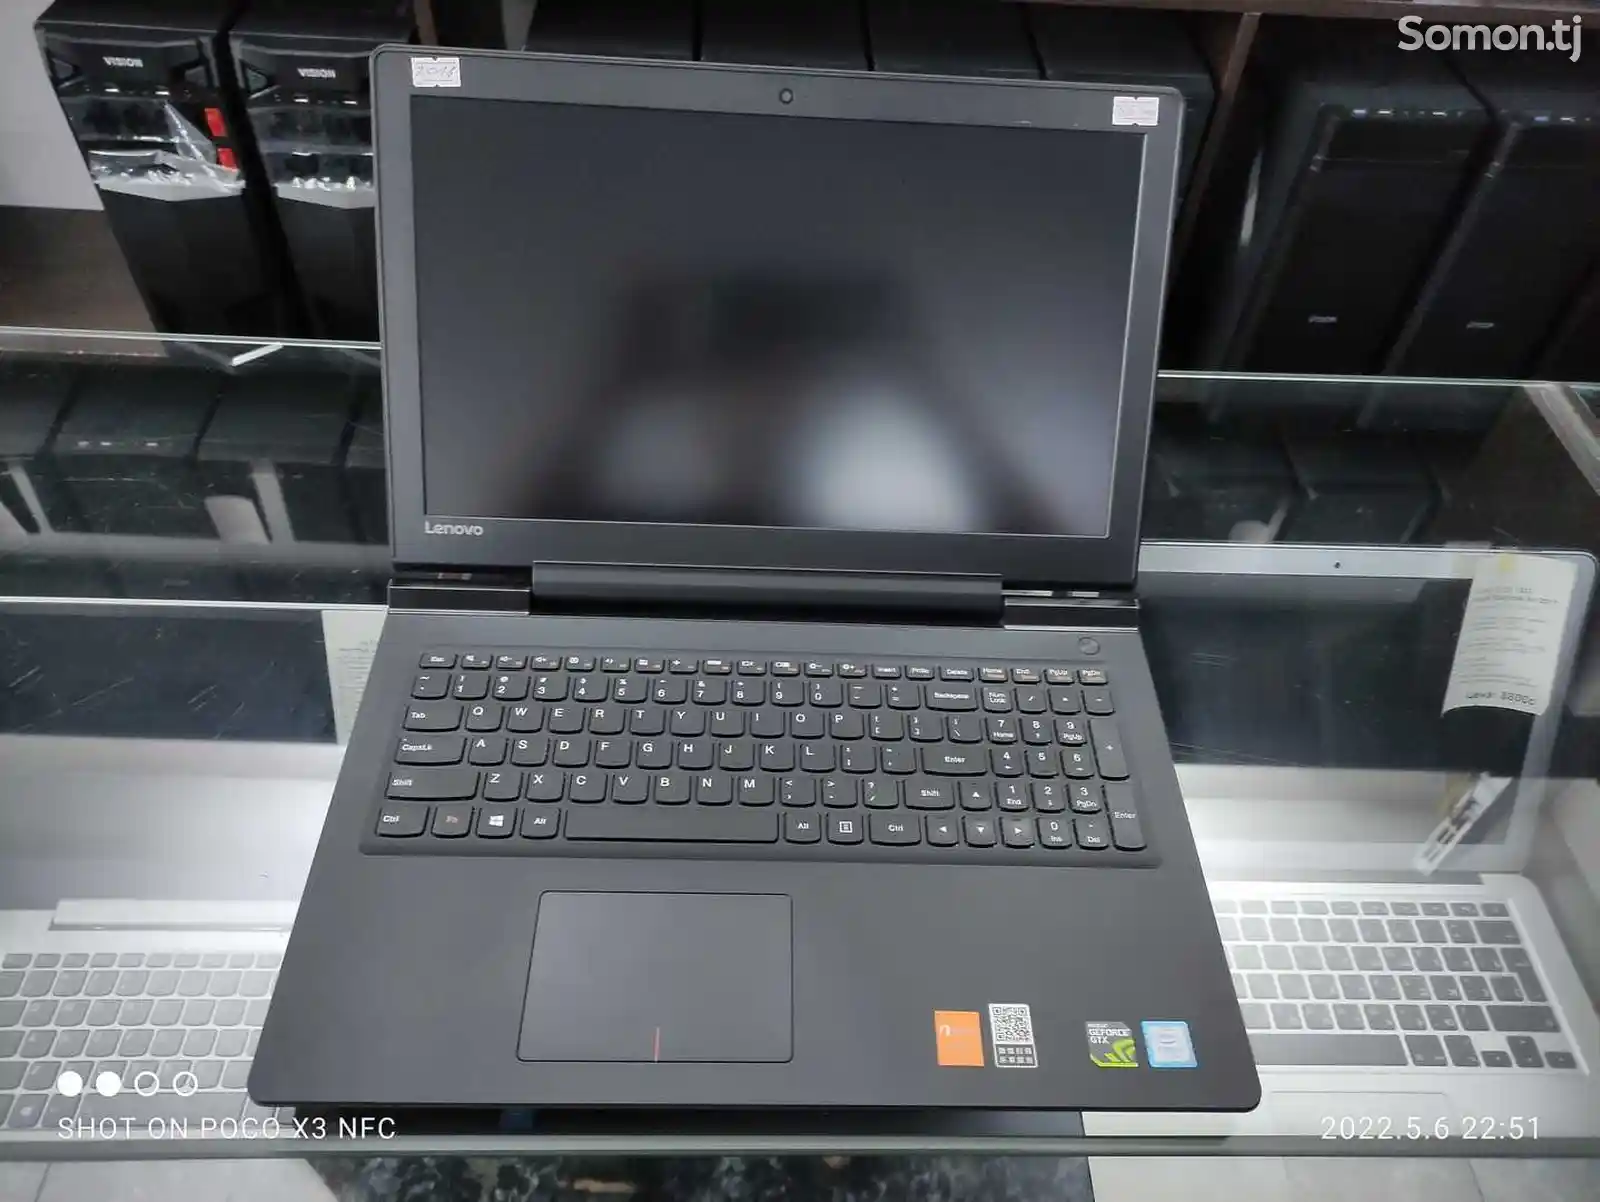 Игровой ноутбук Lenovo Ideapad 700 Gaming Core i5-6300HQ GTX 950M 4GB-1